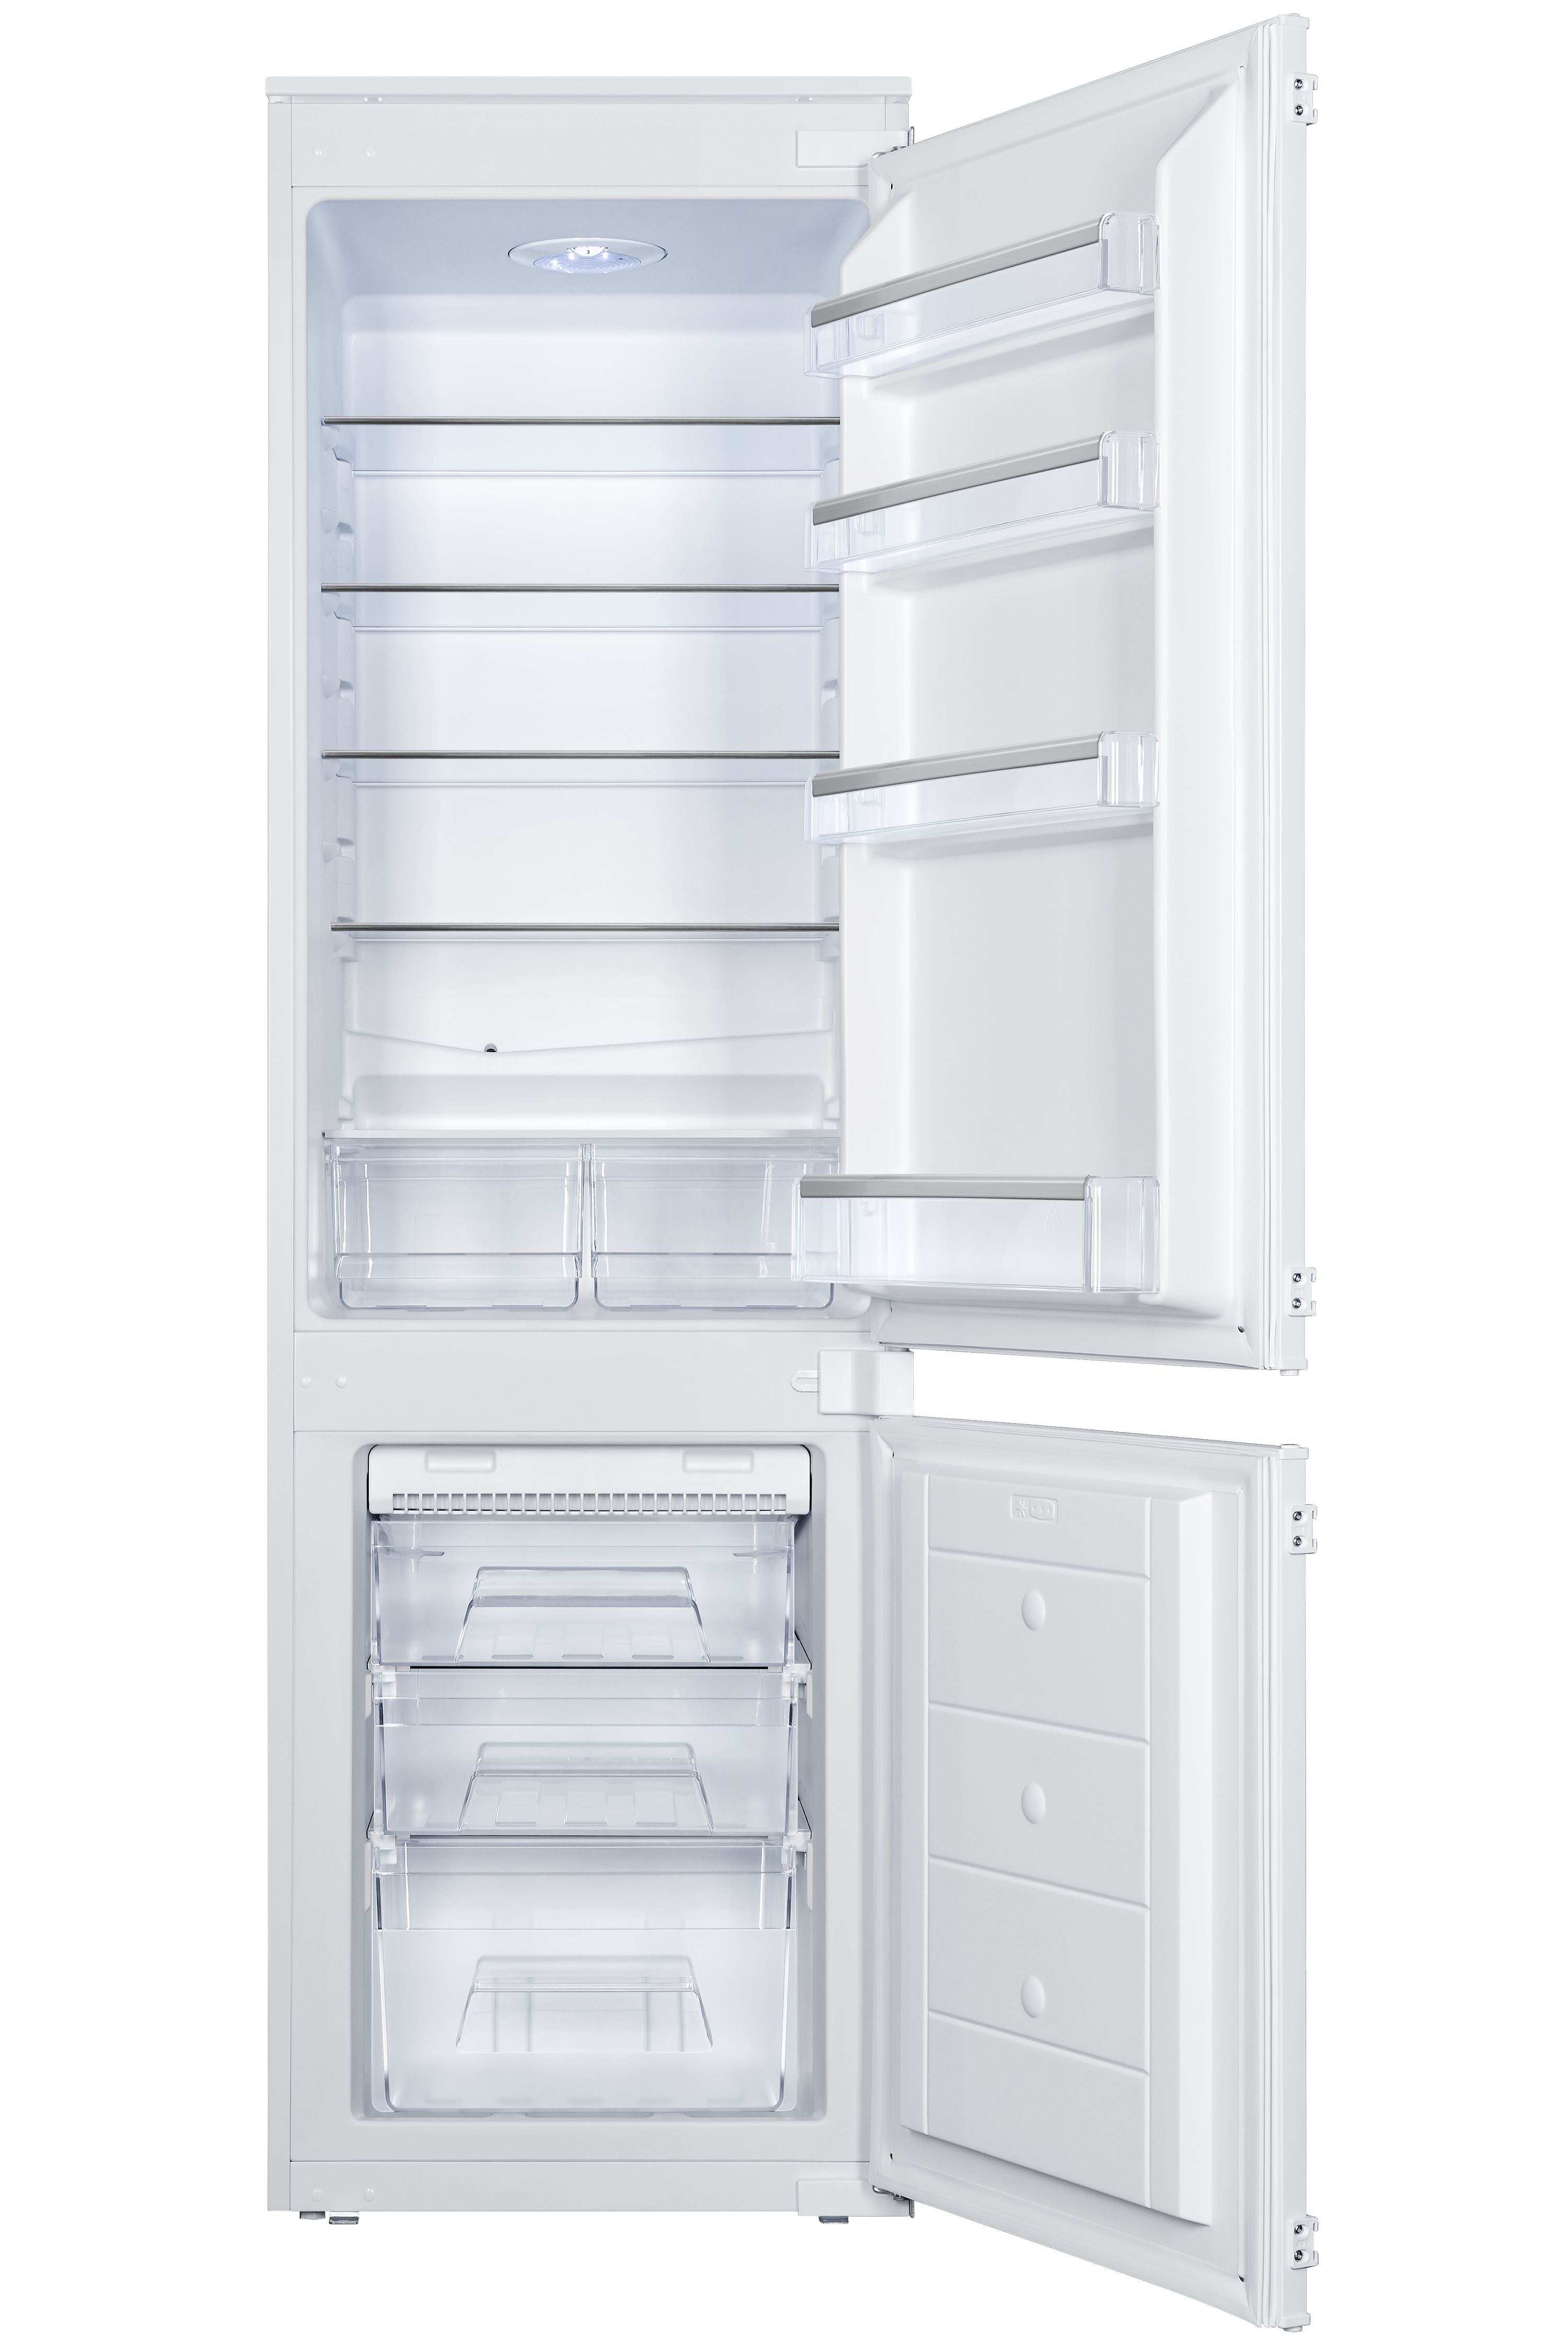 GoodHome GHBI7030FFUK 70:30 Classic Integrated Automatic defrost Fridge freezer - White